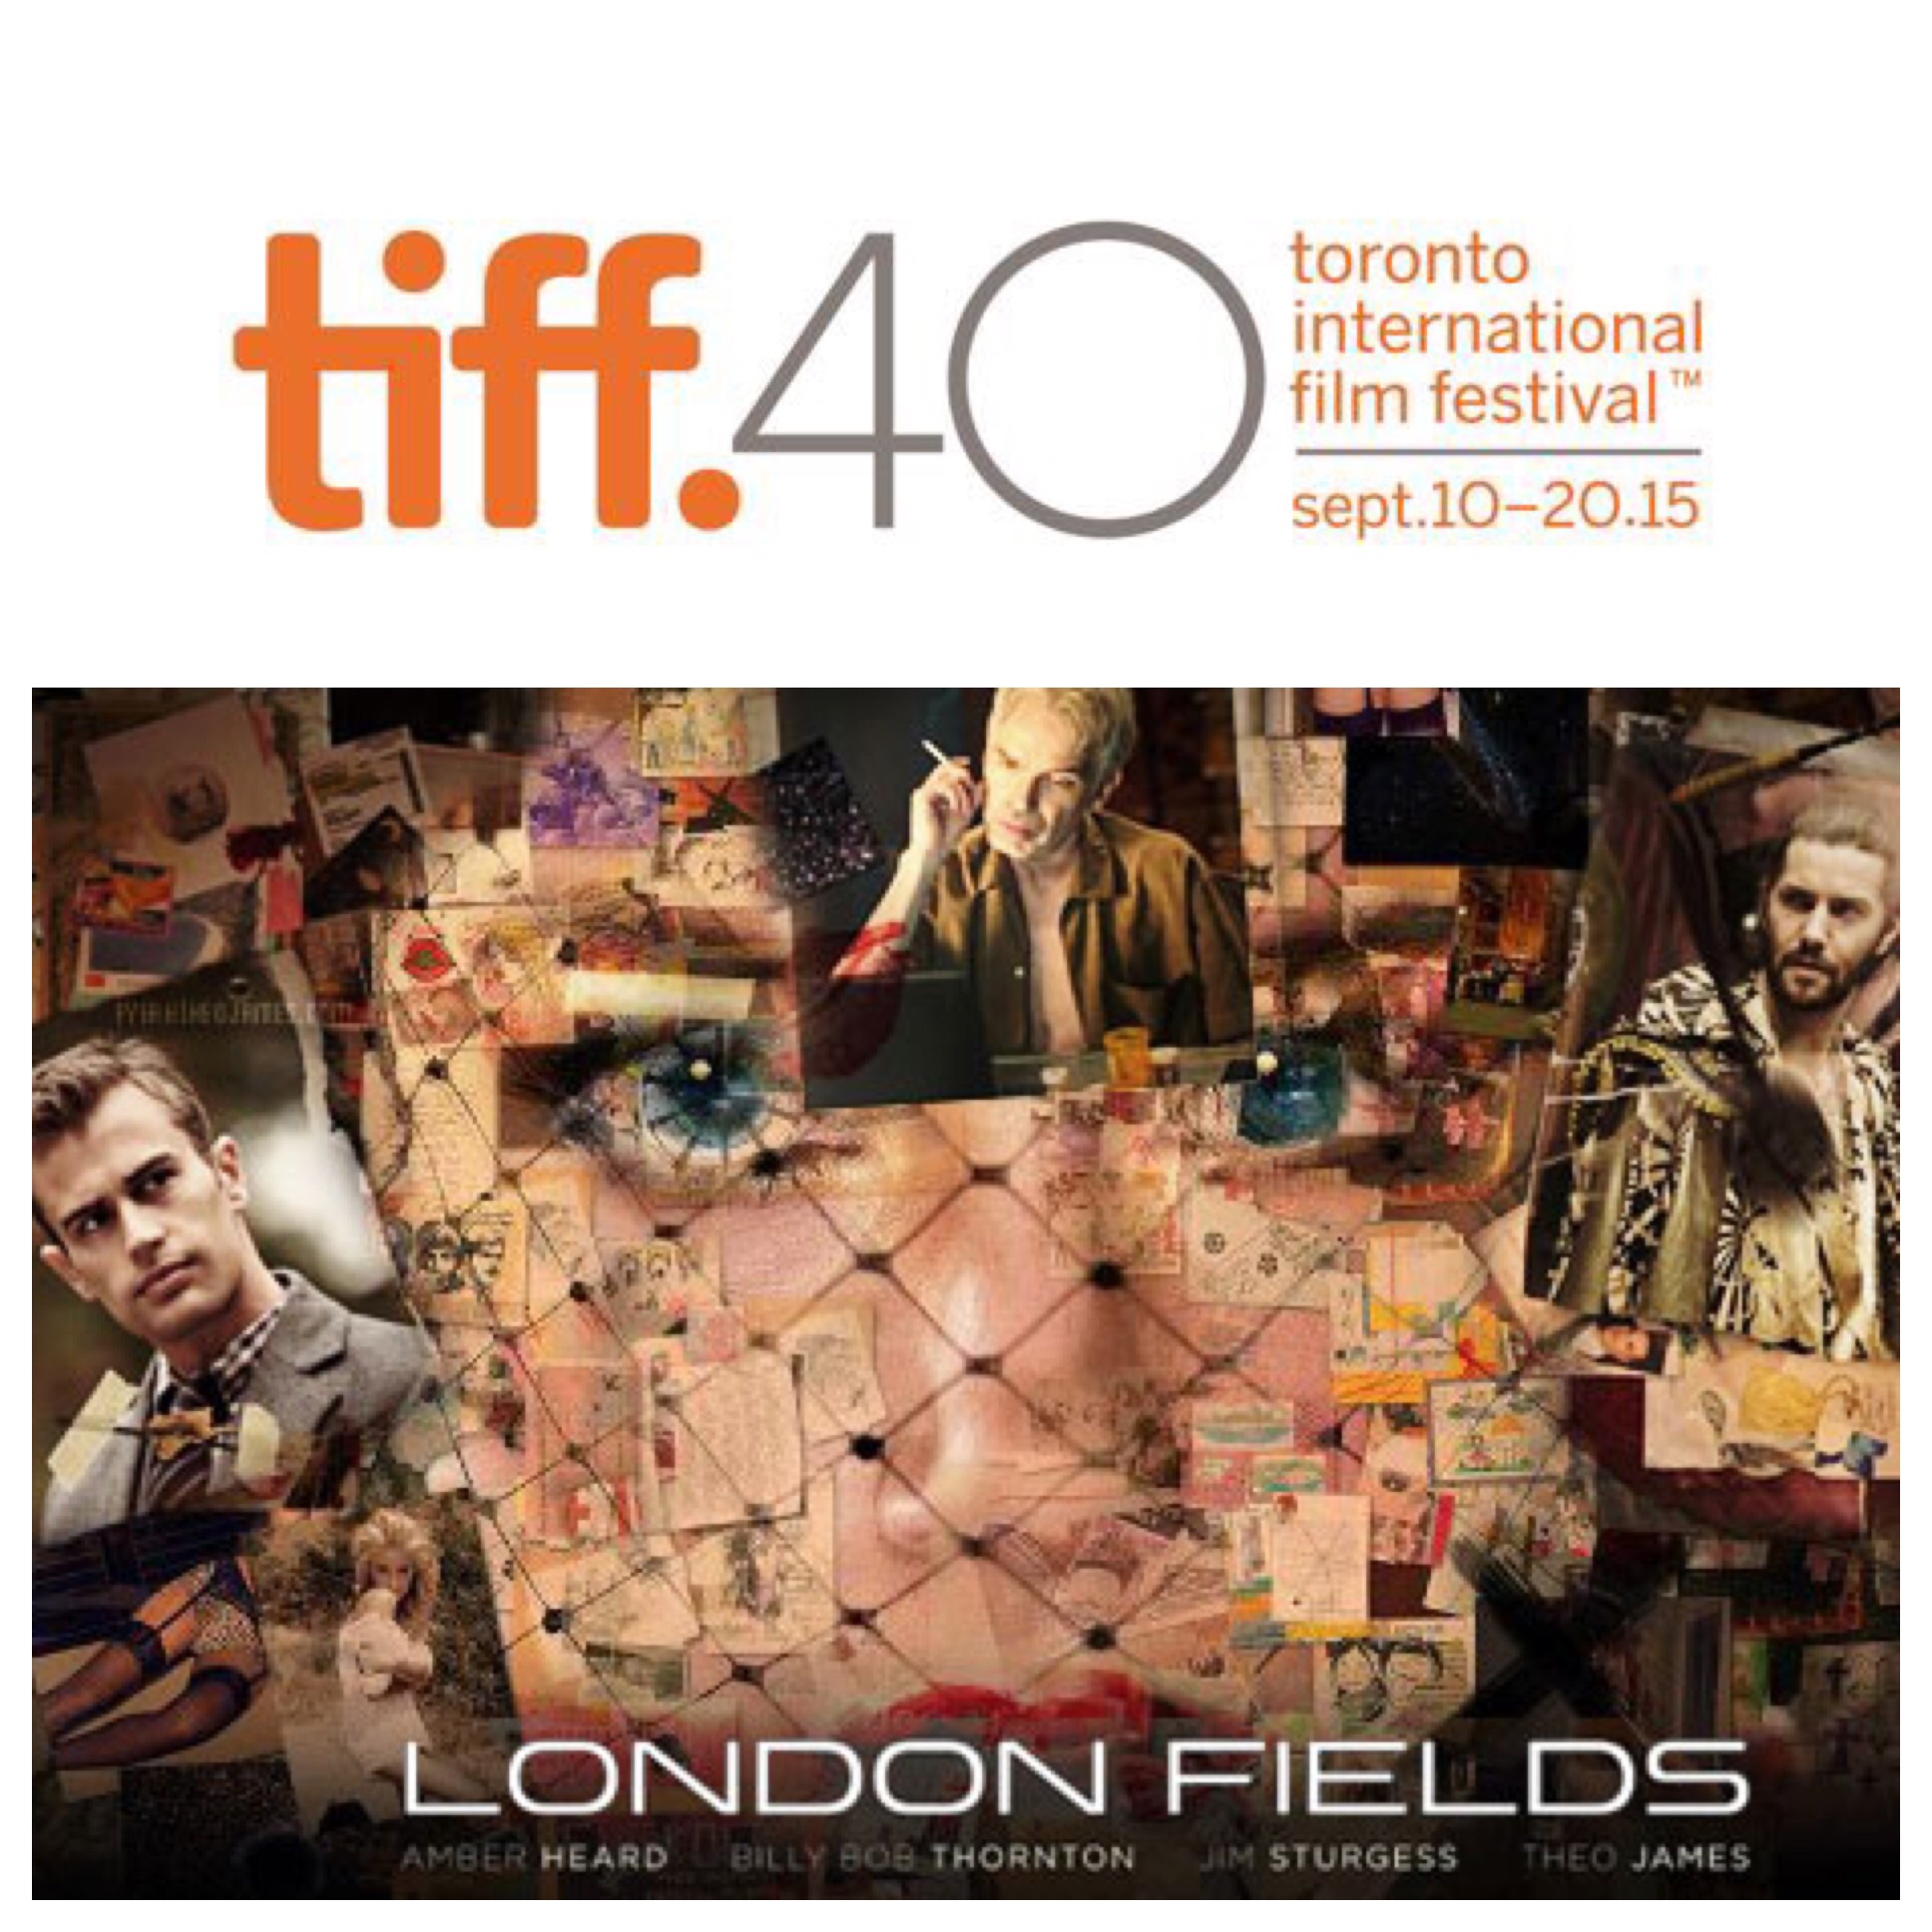 ‘London Fields’ Dropped From TIFF Schedule